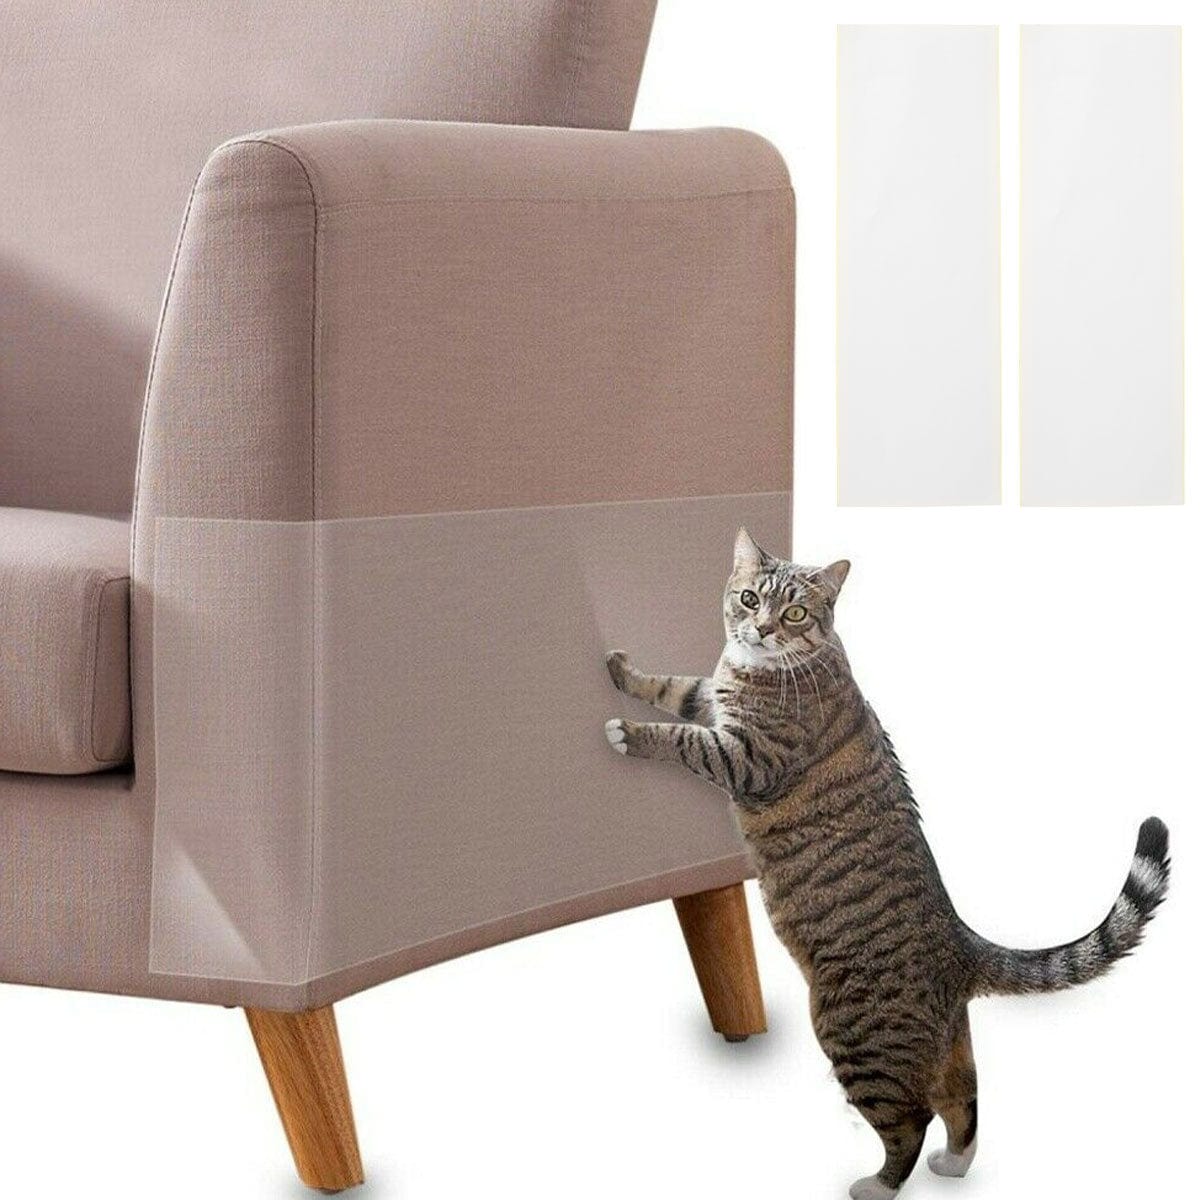 Willstar anti Cat Scratch Furniture Protector 2Pcs Self-Adhesive Cat Scratch Deterrent Tape Thick Flexible Cat Scratching Pad